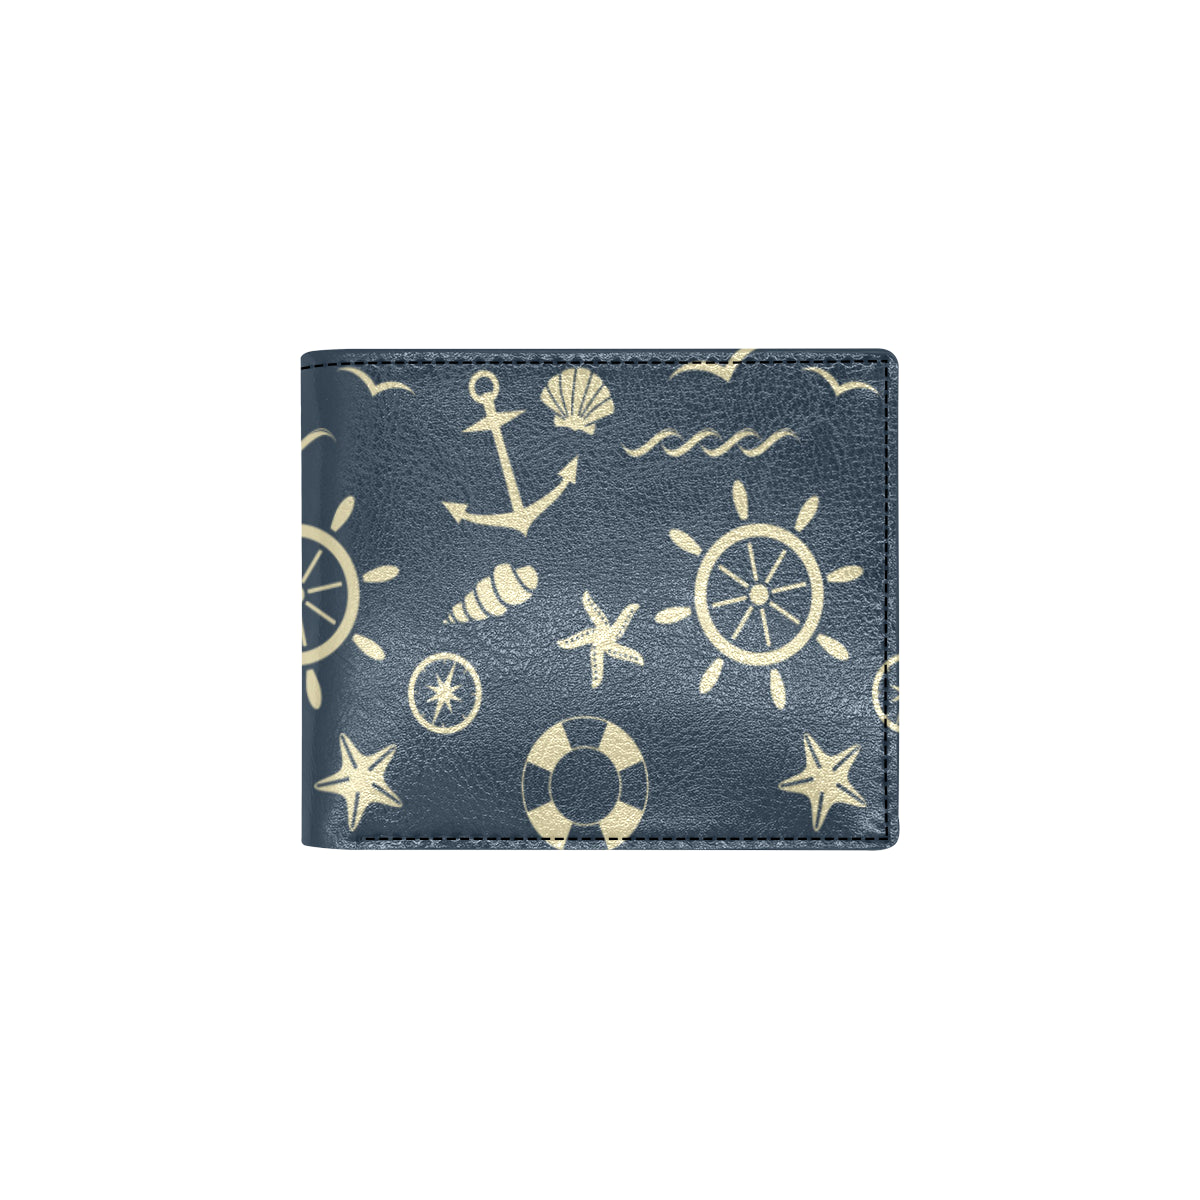 Nautical Pattern Print Design A01 Men's ID Card Wallet